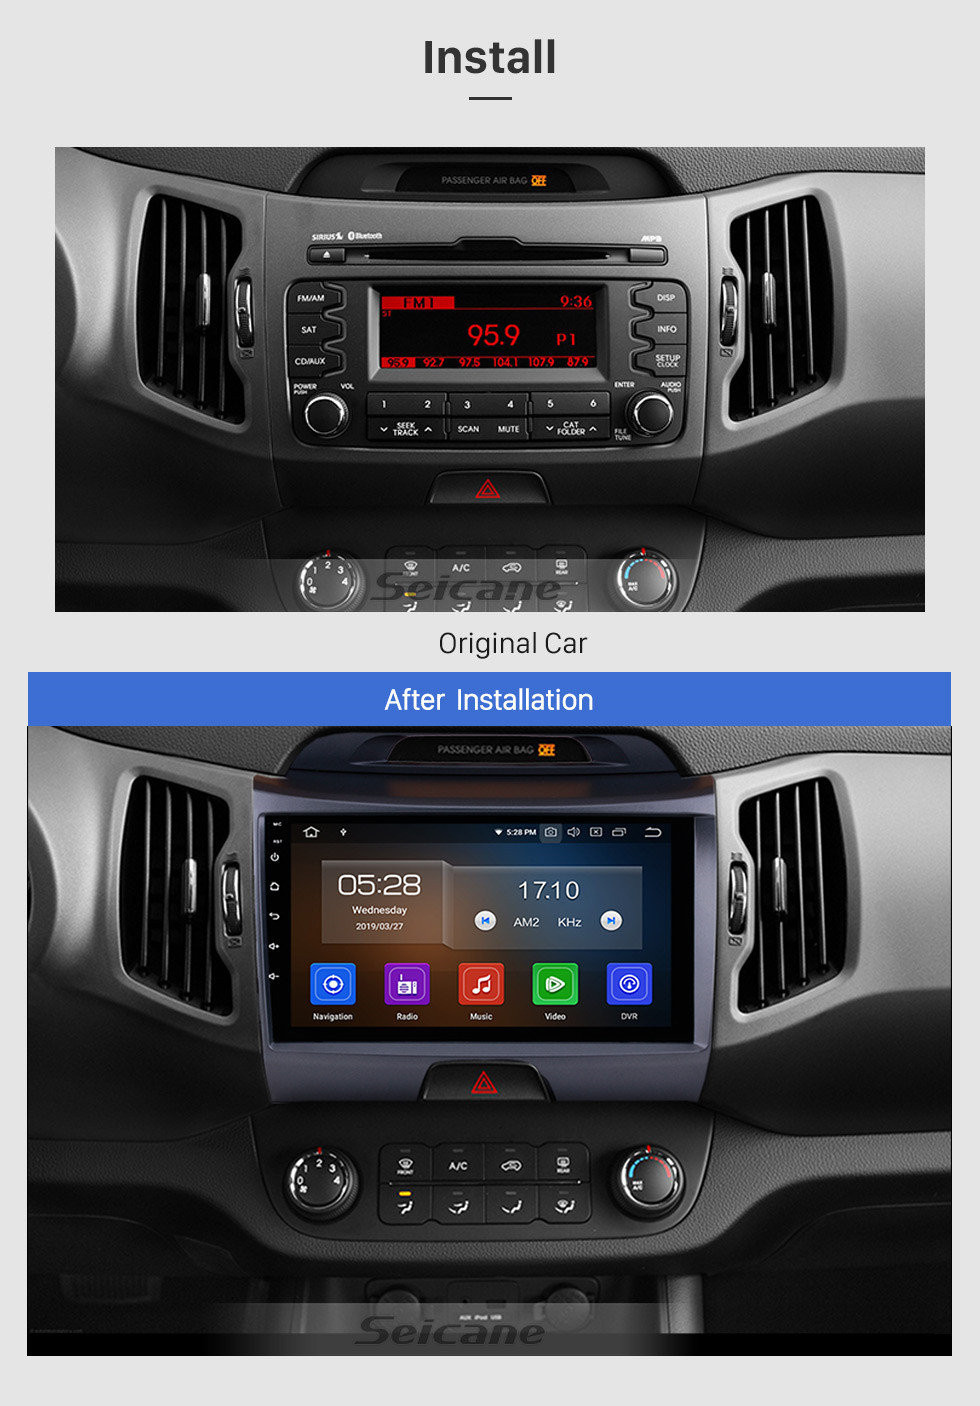 Seicane 9 pulgadas Android 11.0 Pantalla táctil radio Bluetooth Sistema de navegación GPS para 2011-2015 KIA Sportage R con TPMS DVR OBD II USB SD 3G WiFi Cámara trasera Control del volante HD 1080P Video AUX